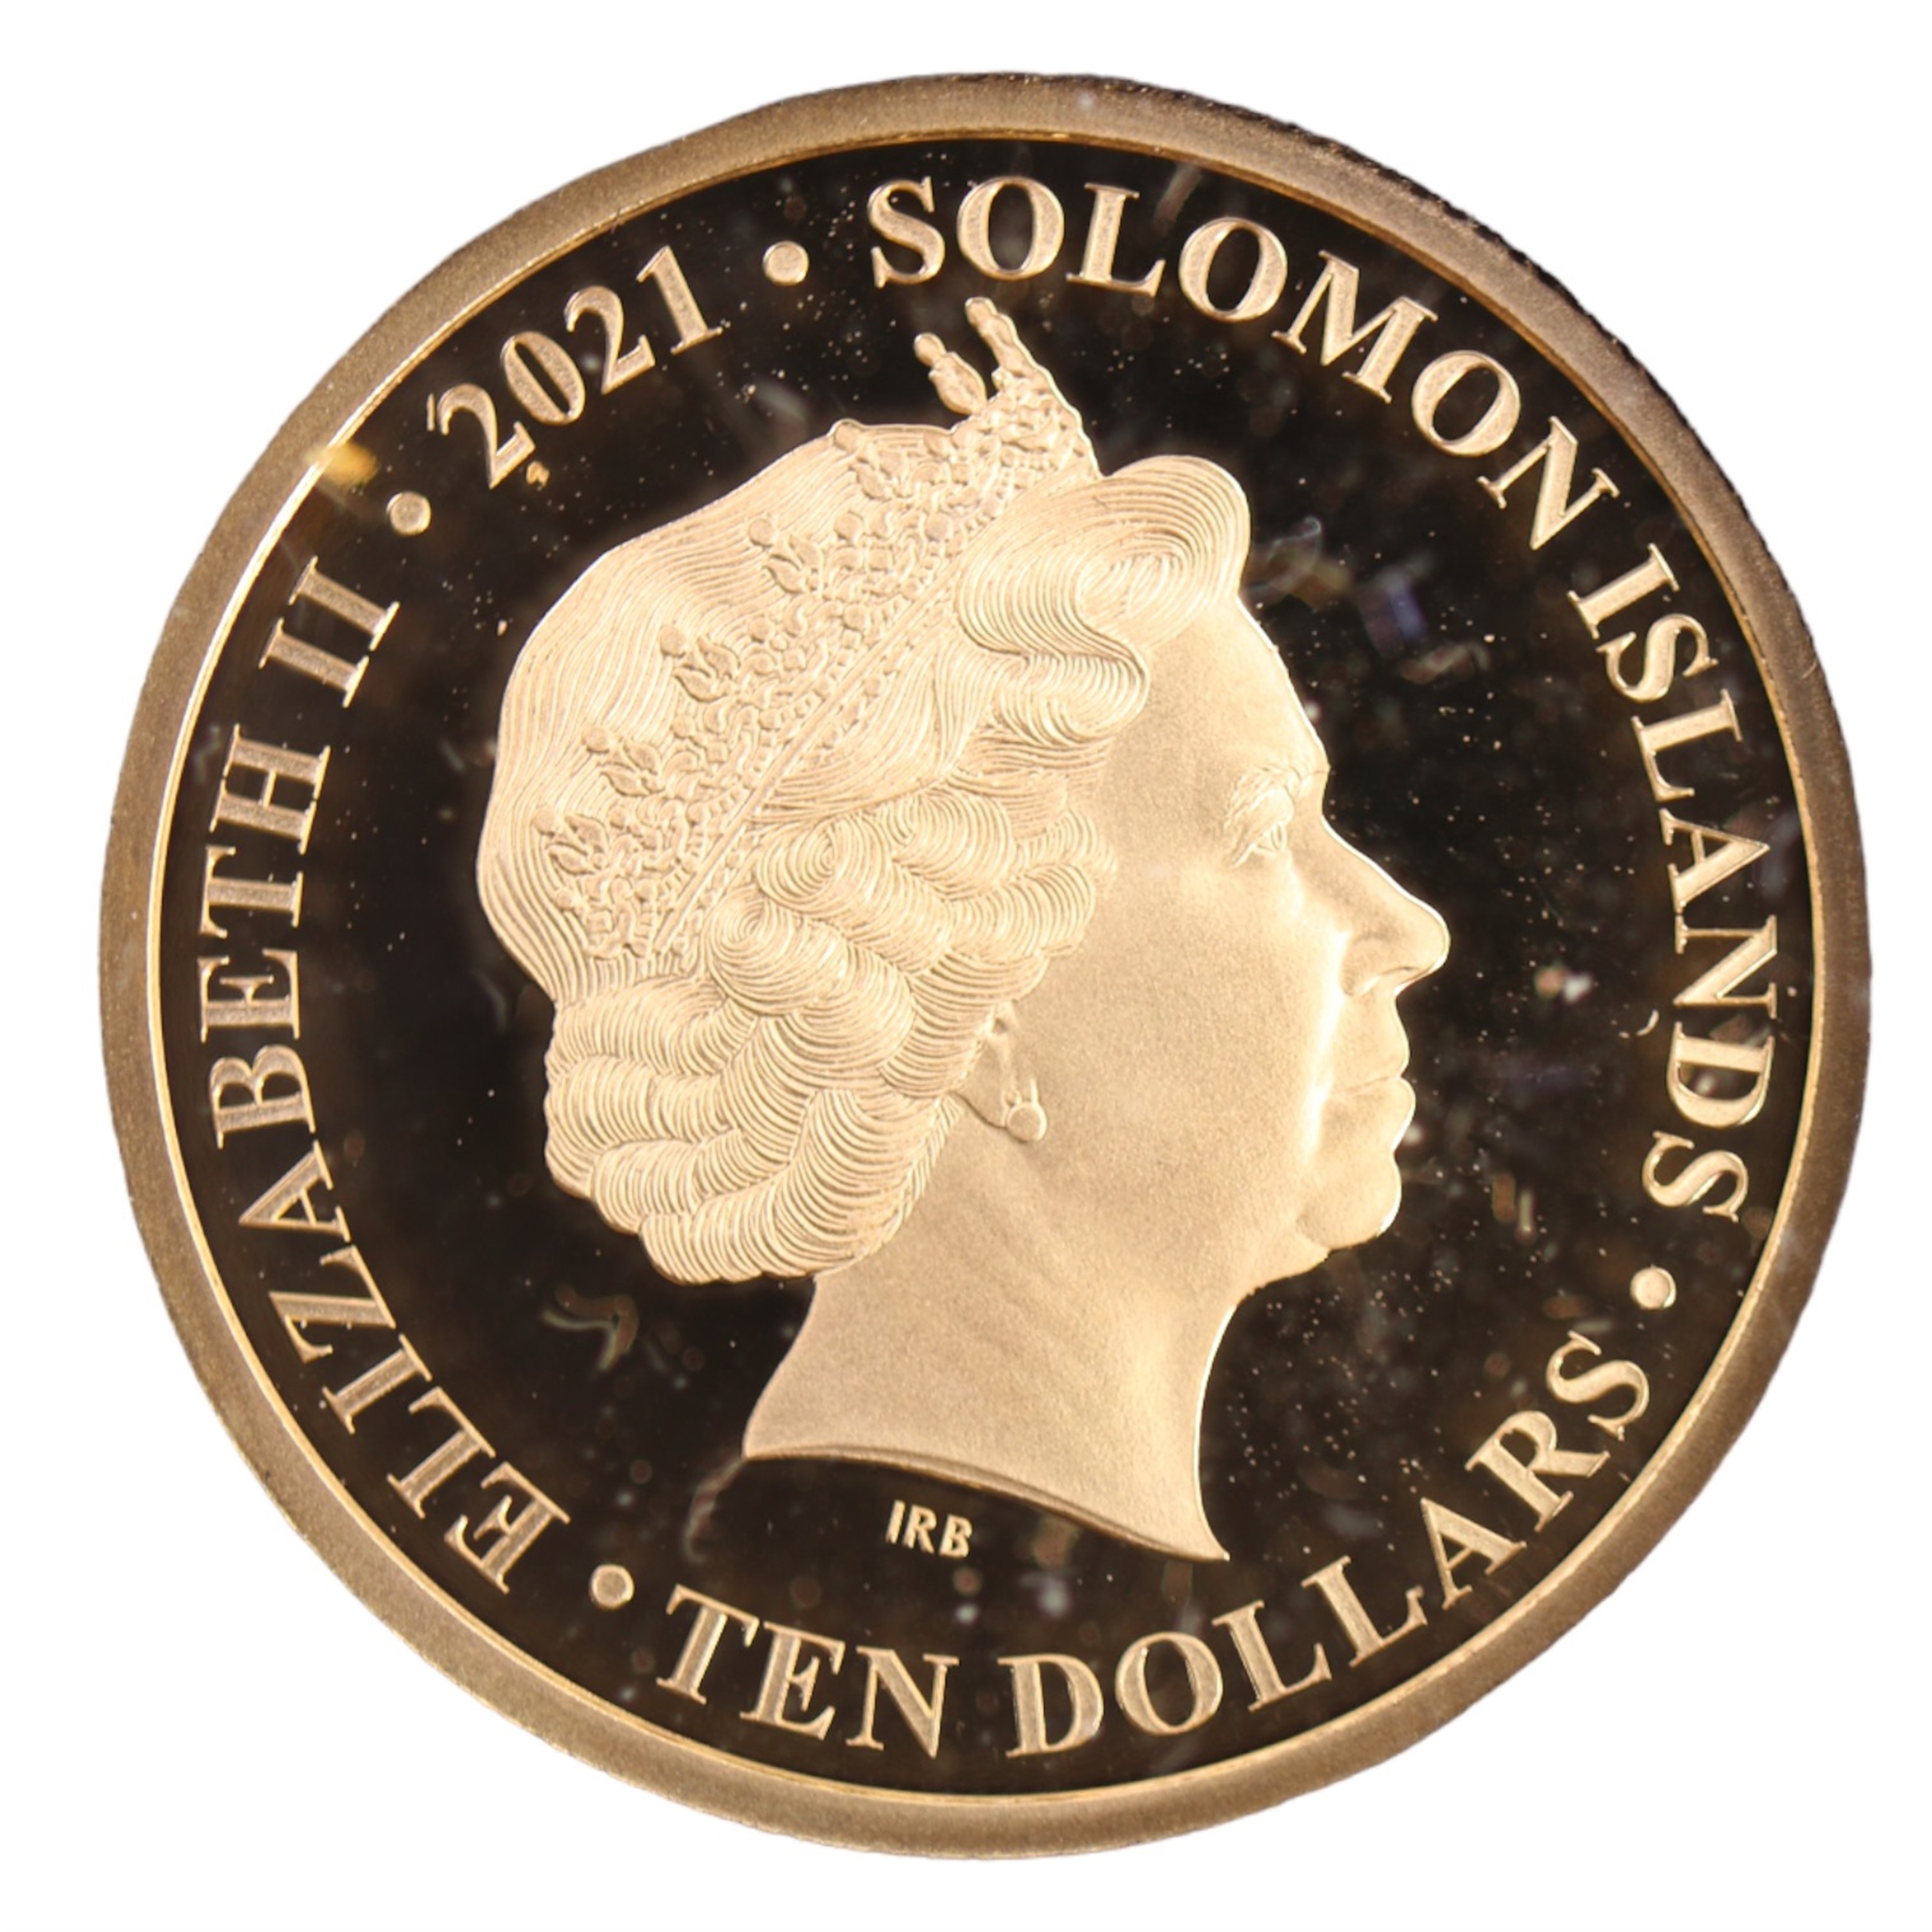 A cased 2021 Queen Elizabeth II commemorative proof gold coin, 8 g